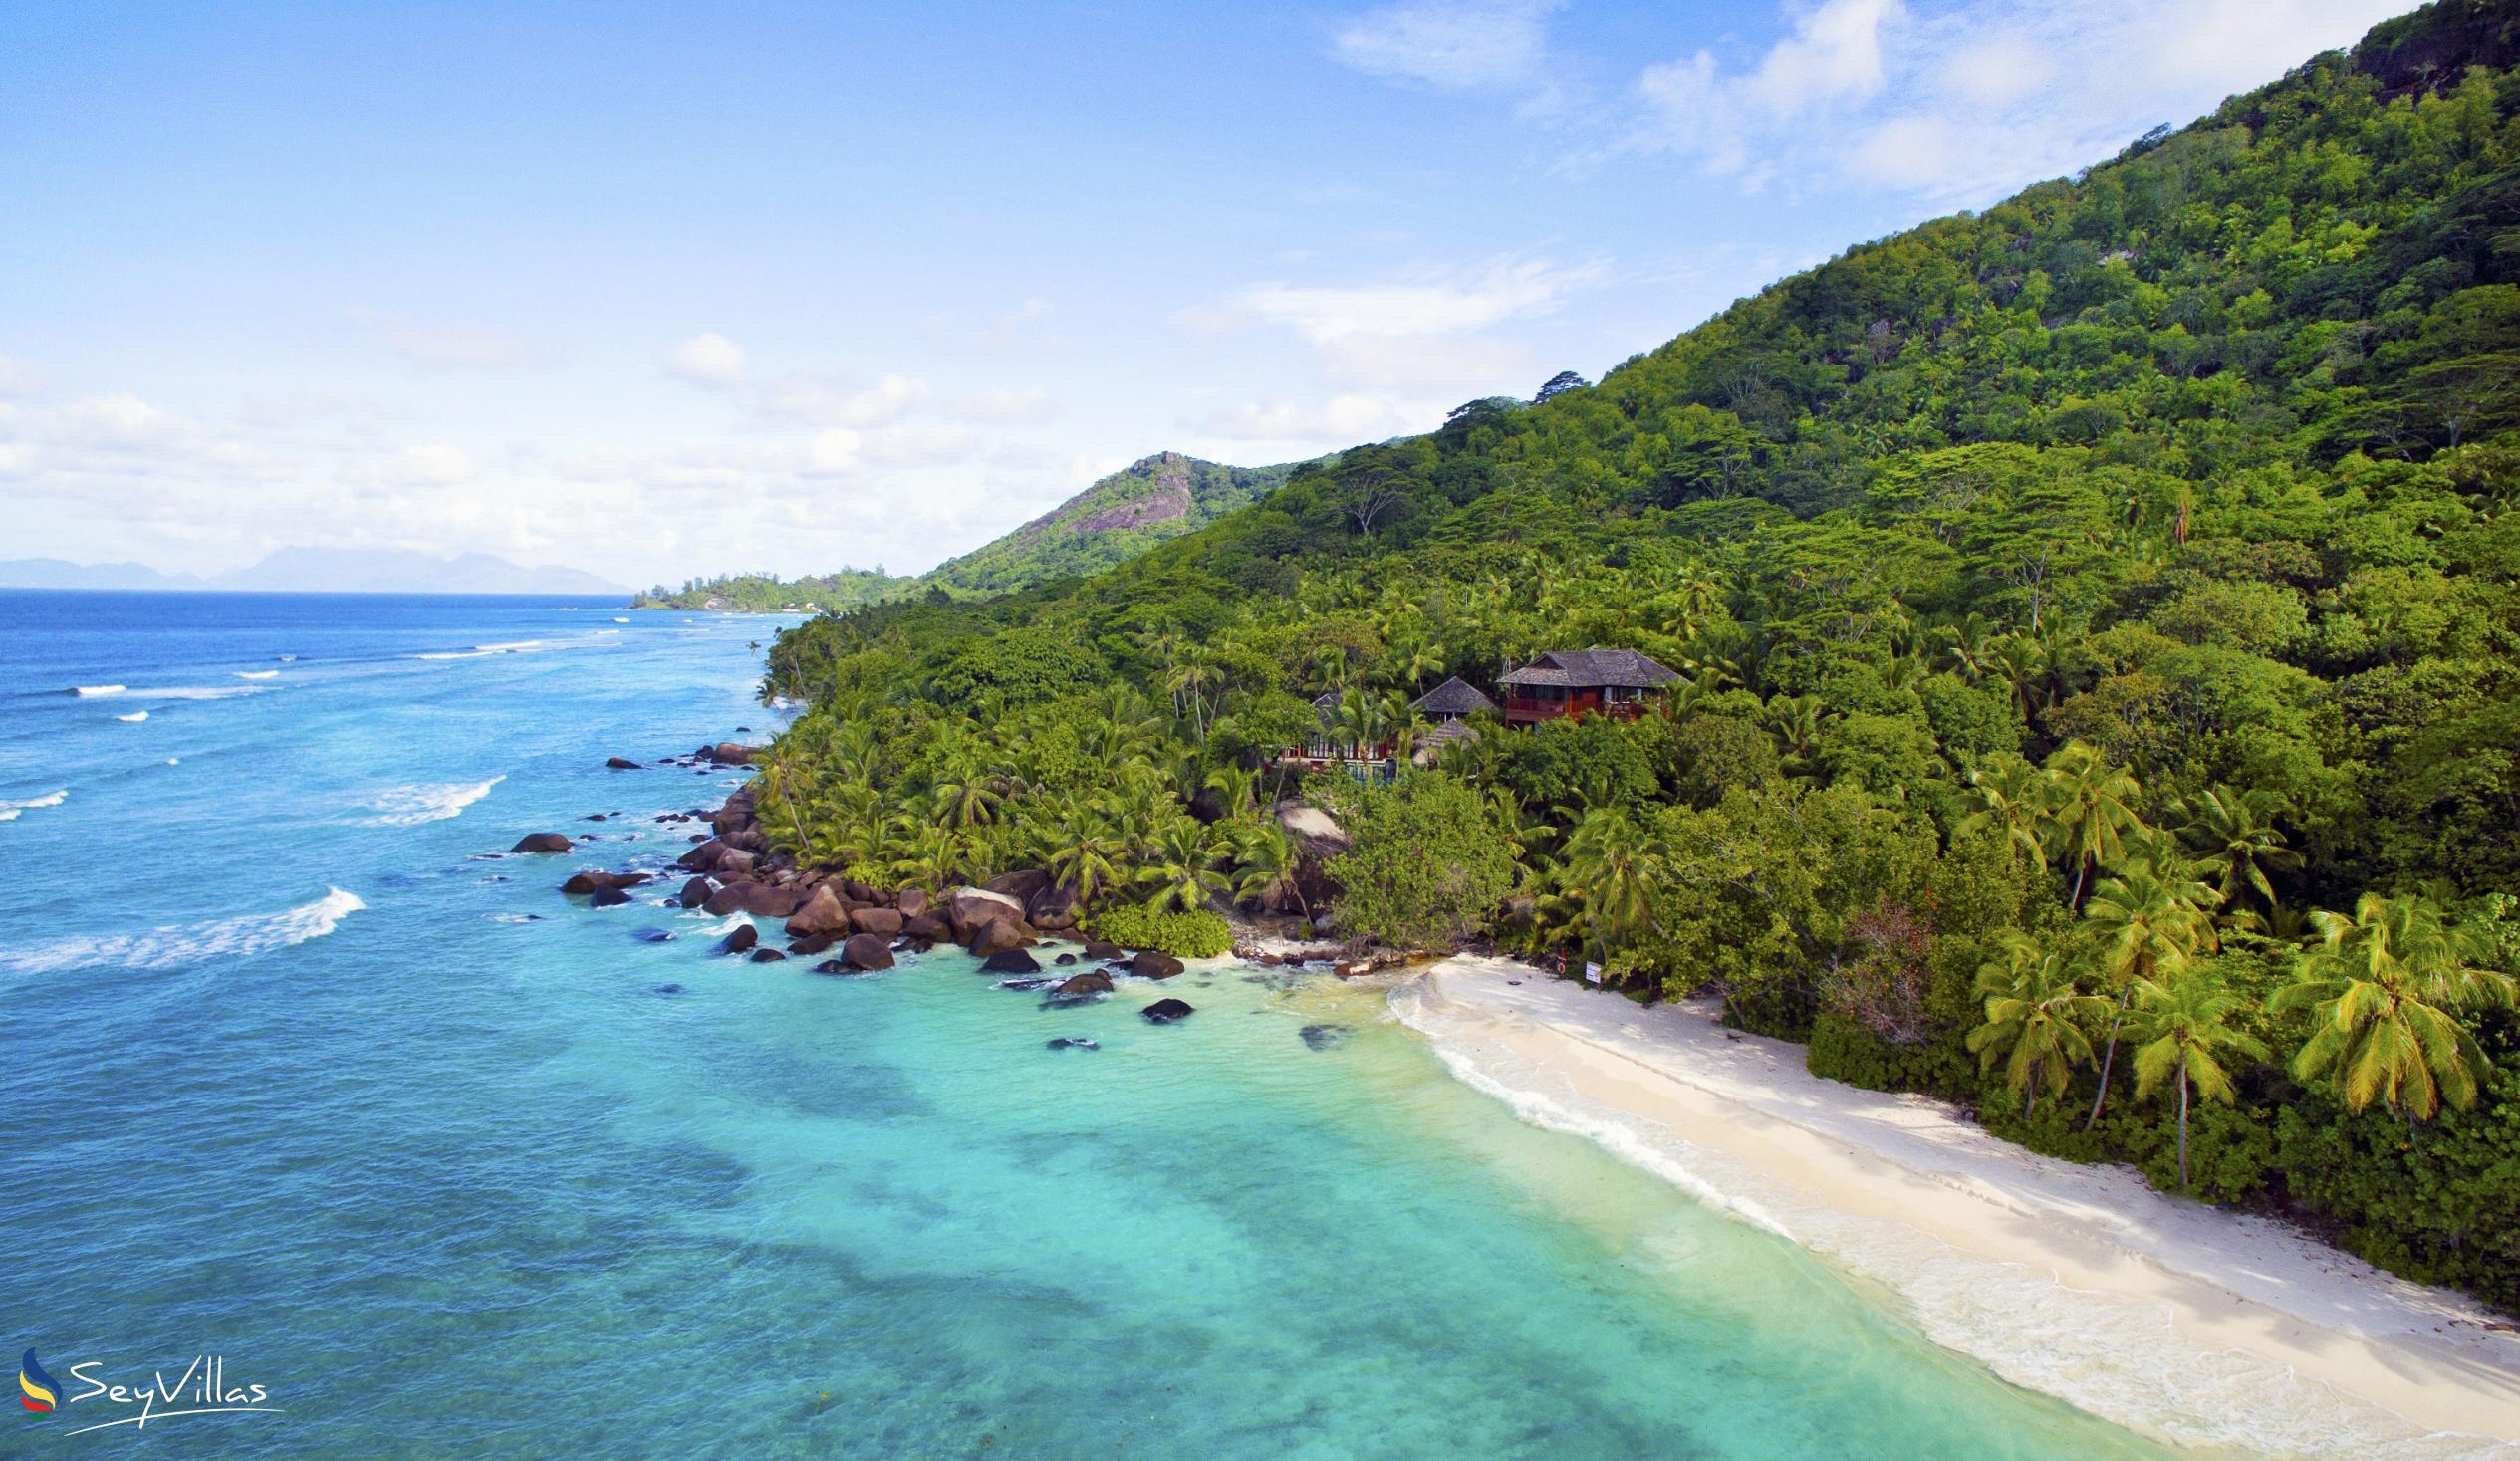 Photo 71: Hilton Seychelles Labriz Resort & Spa - Outdoor area - Silhouette Island (Seychelles)